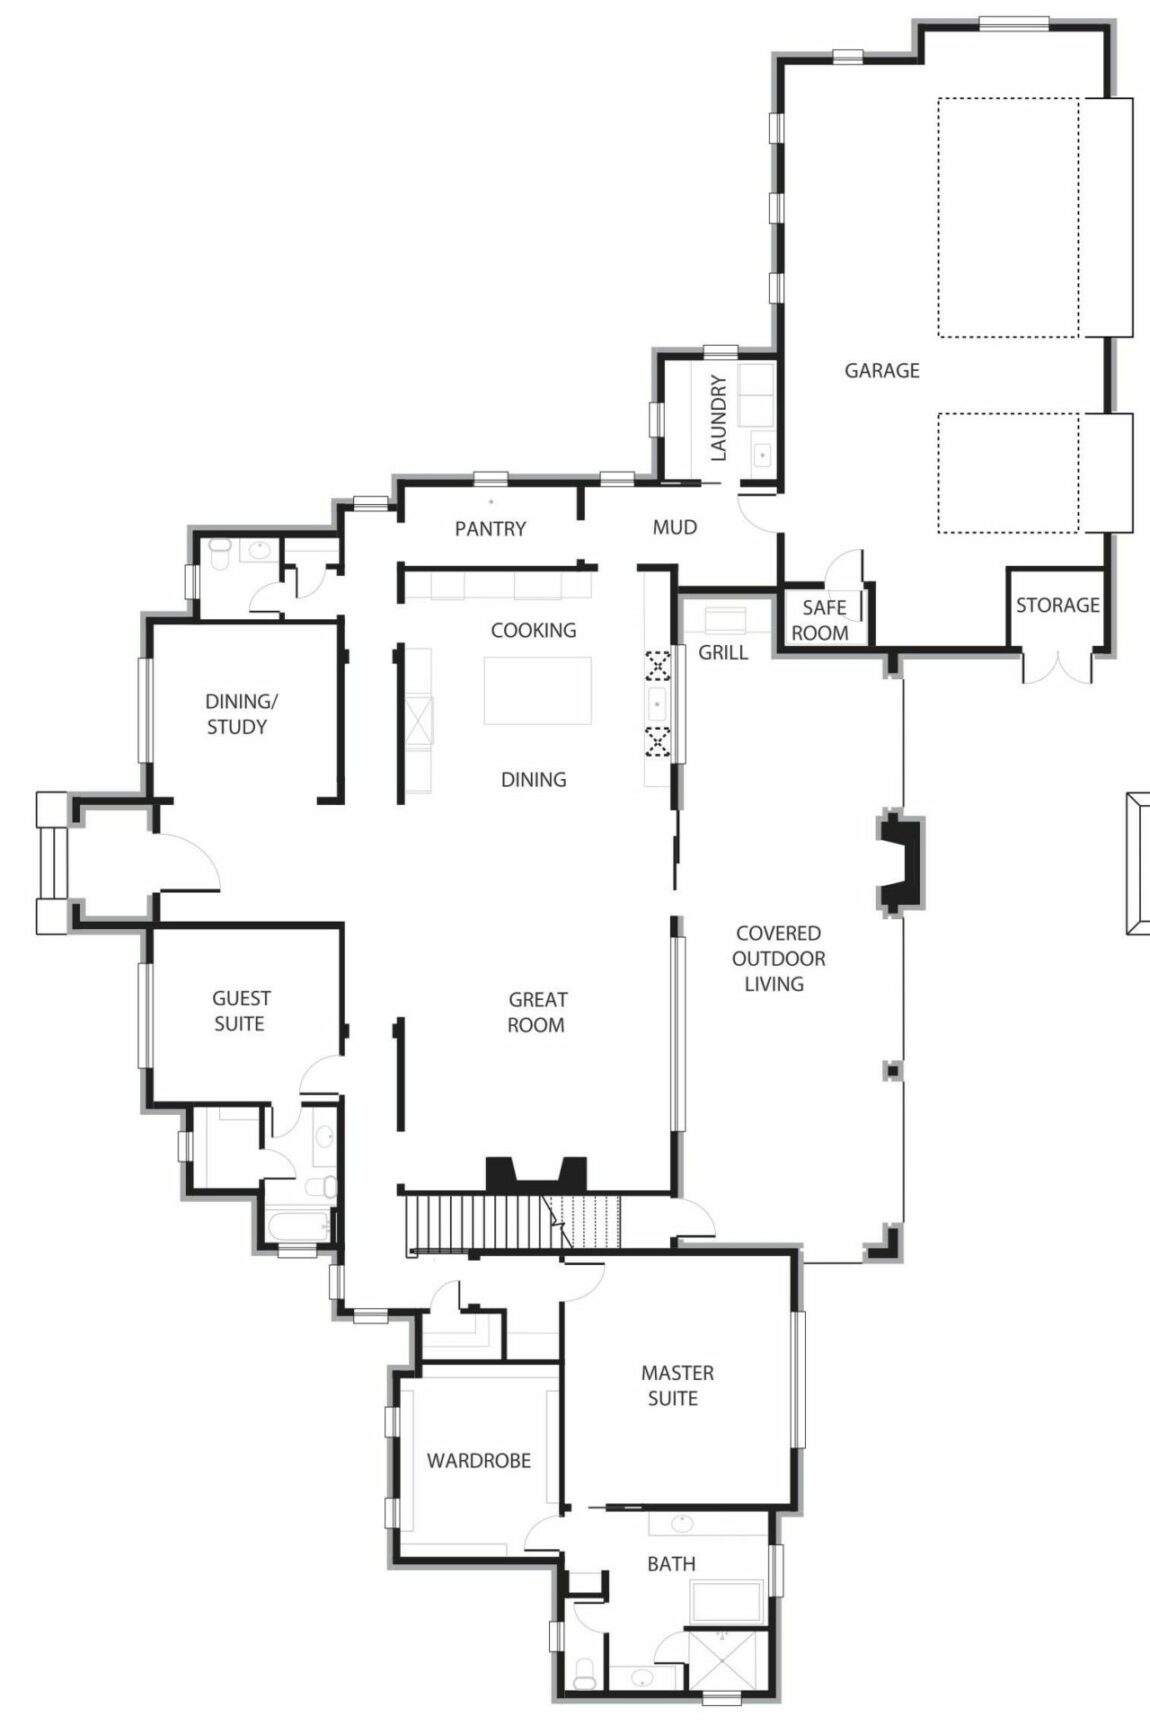 Home for Sale Norman OK Luxury Floor Plan